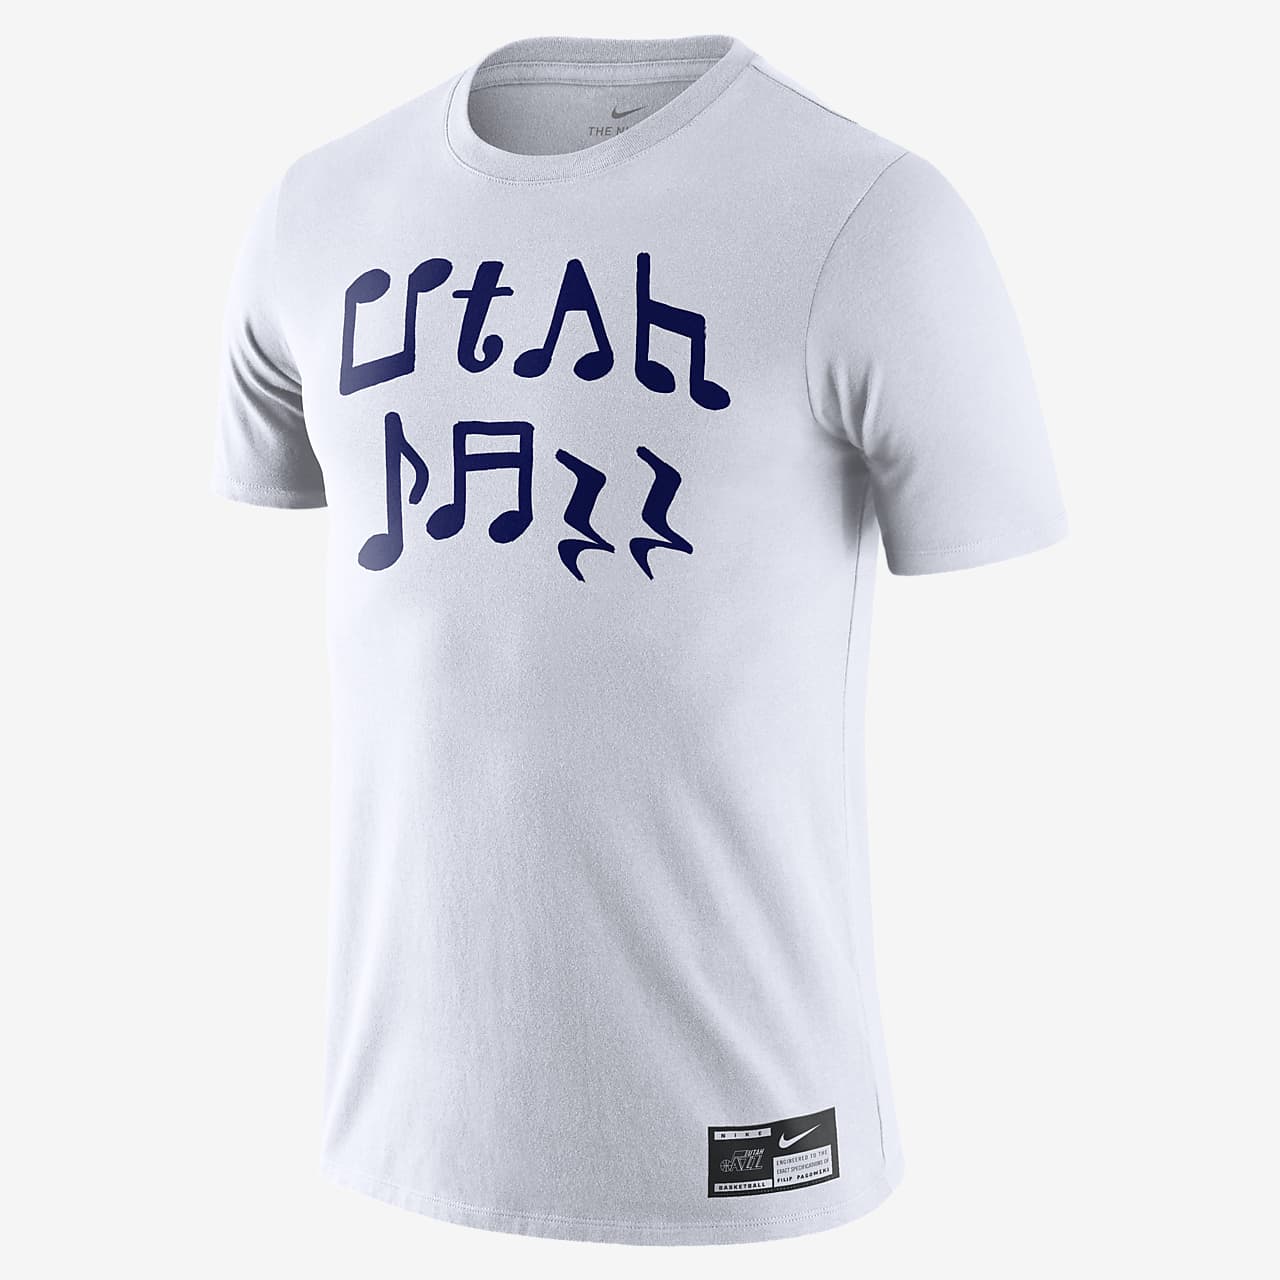 Utah Jazz Nike x Filip Pagowski Men's NBA T-Shirt